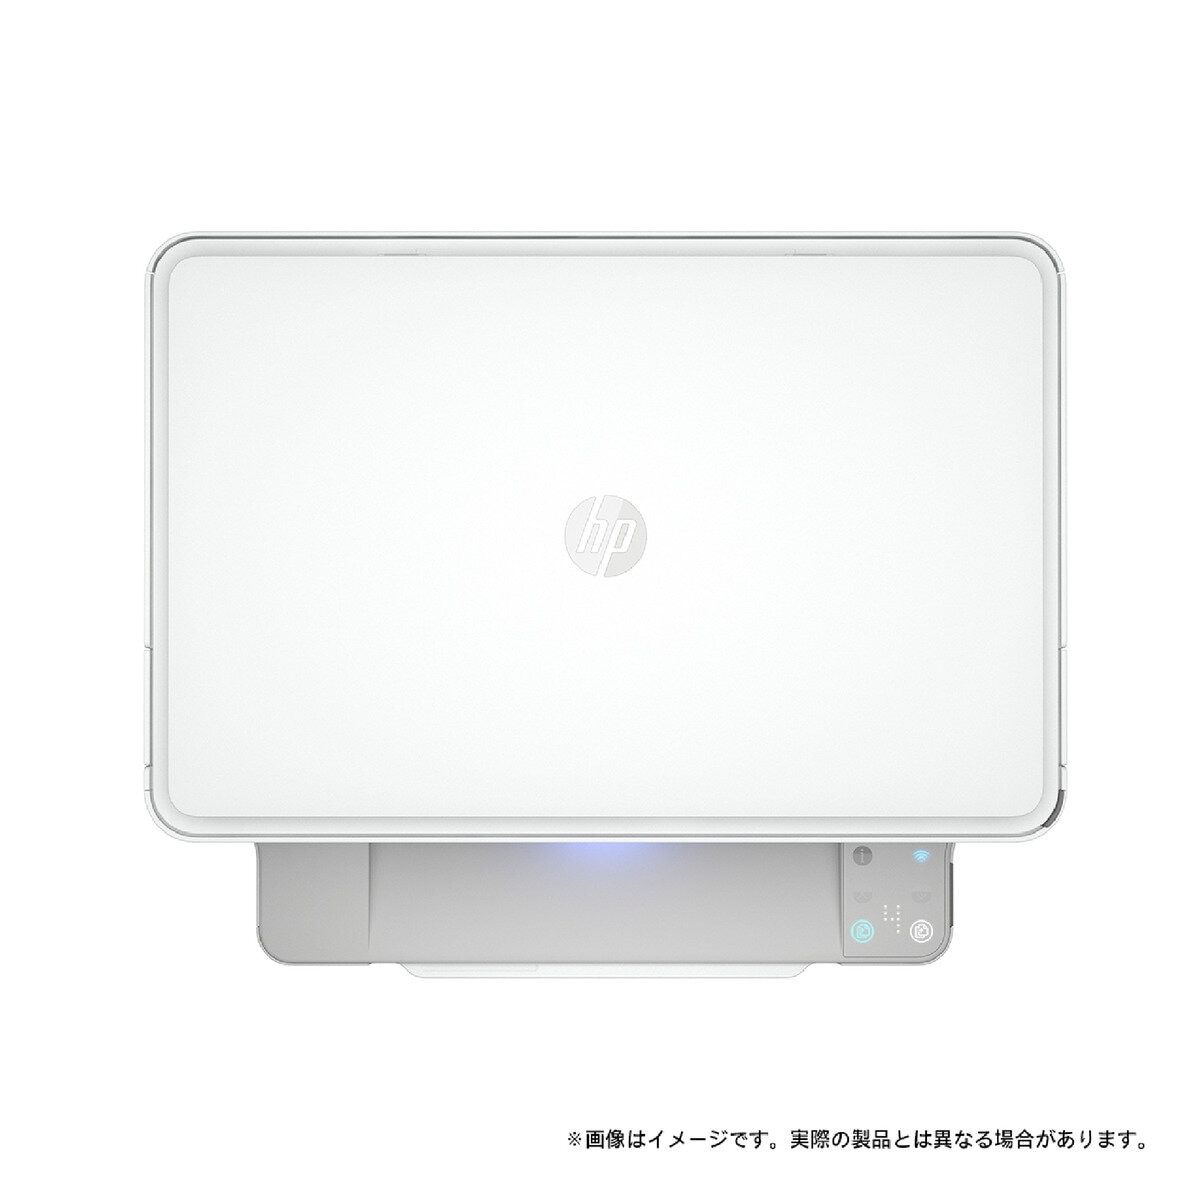 HP ENVY 6020 インクジェットプリンター ホワイト Costco Japan